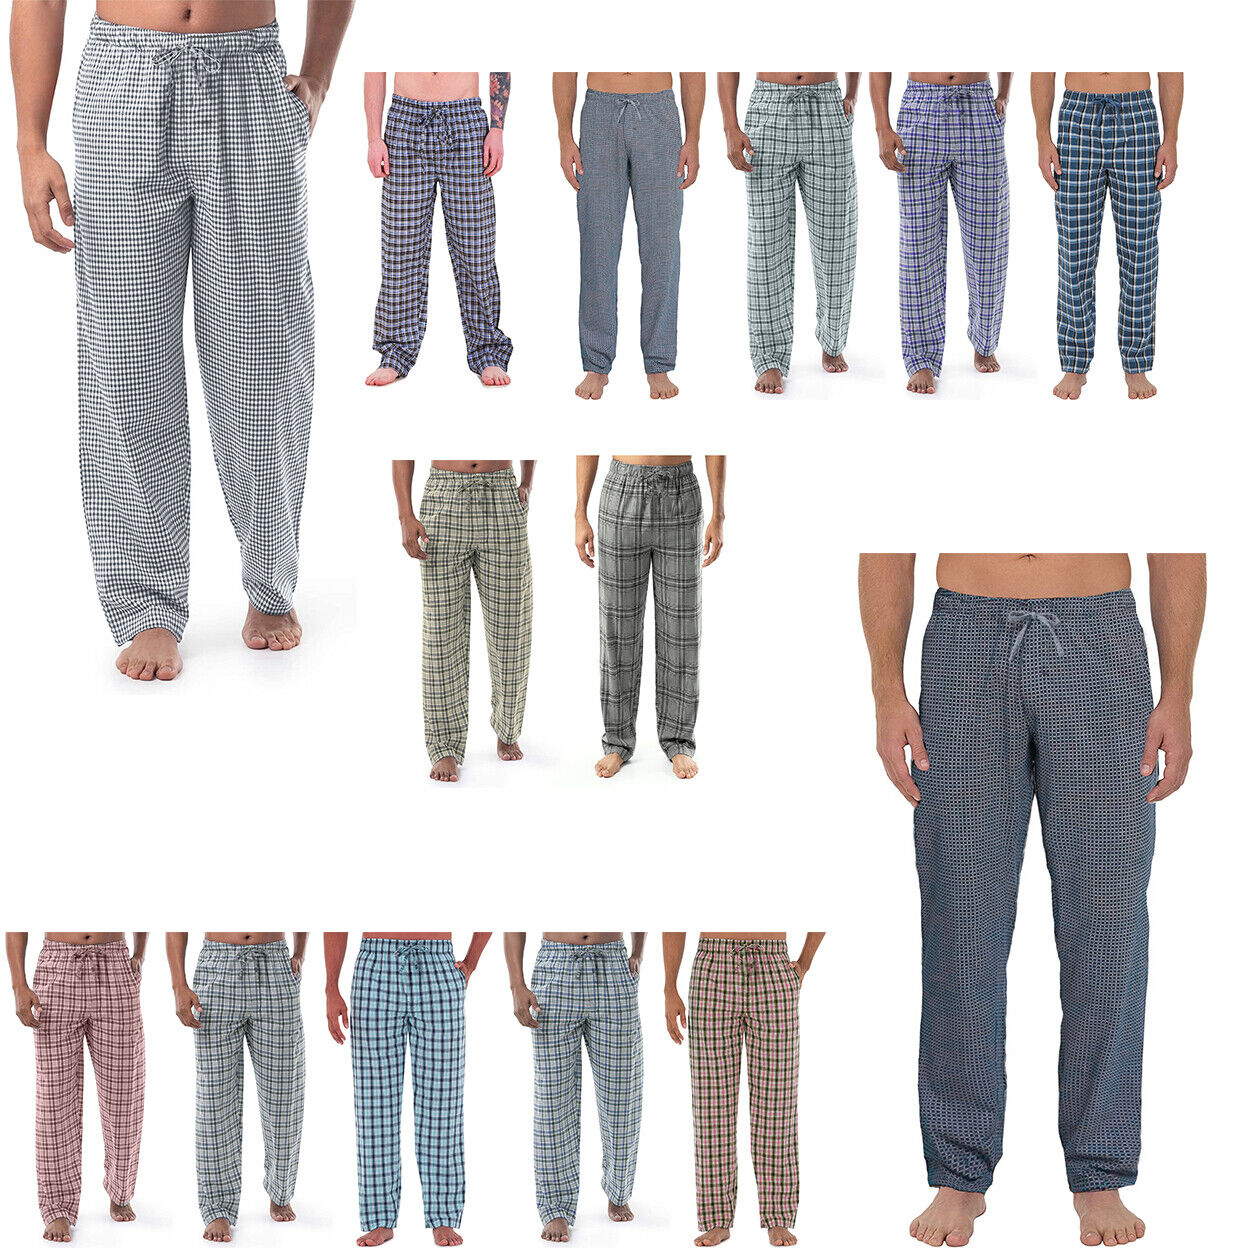 3-Pack: Men's Ultra-Soft Solid & Plaid Cotton Jersey Knit Comfy Sleep Lounge Pajama Pants - Plaid, Medium